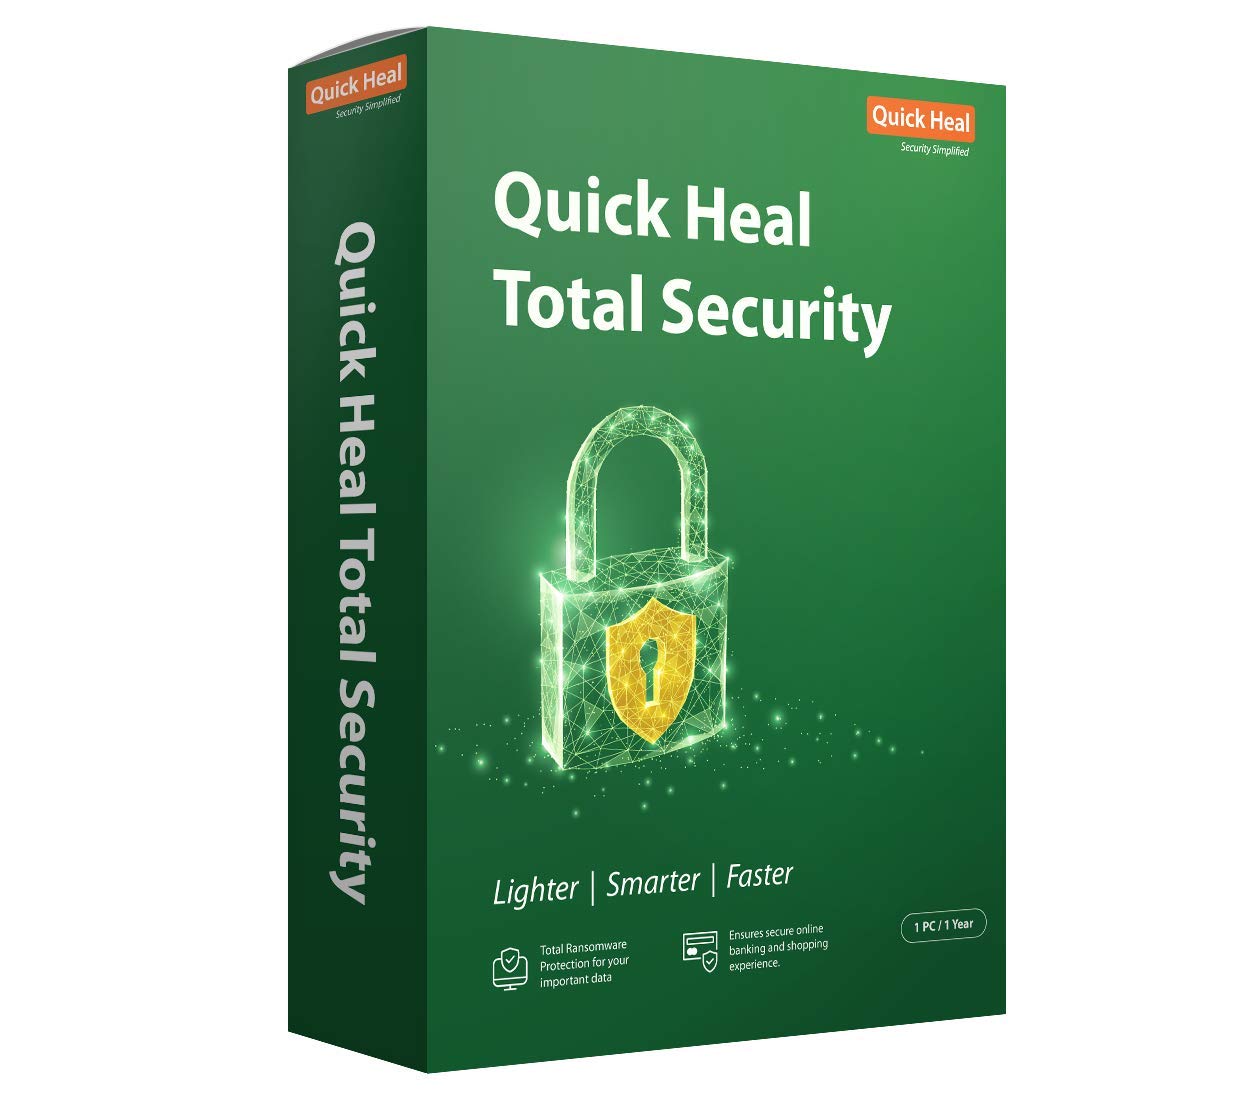 Quickheal total security image